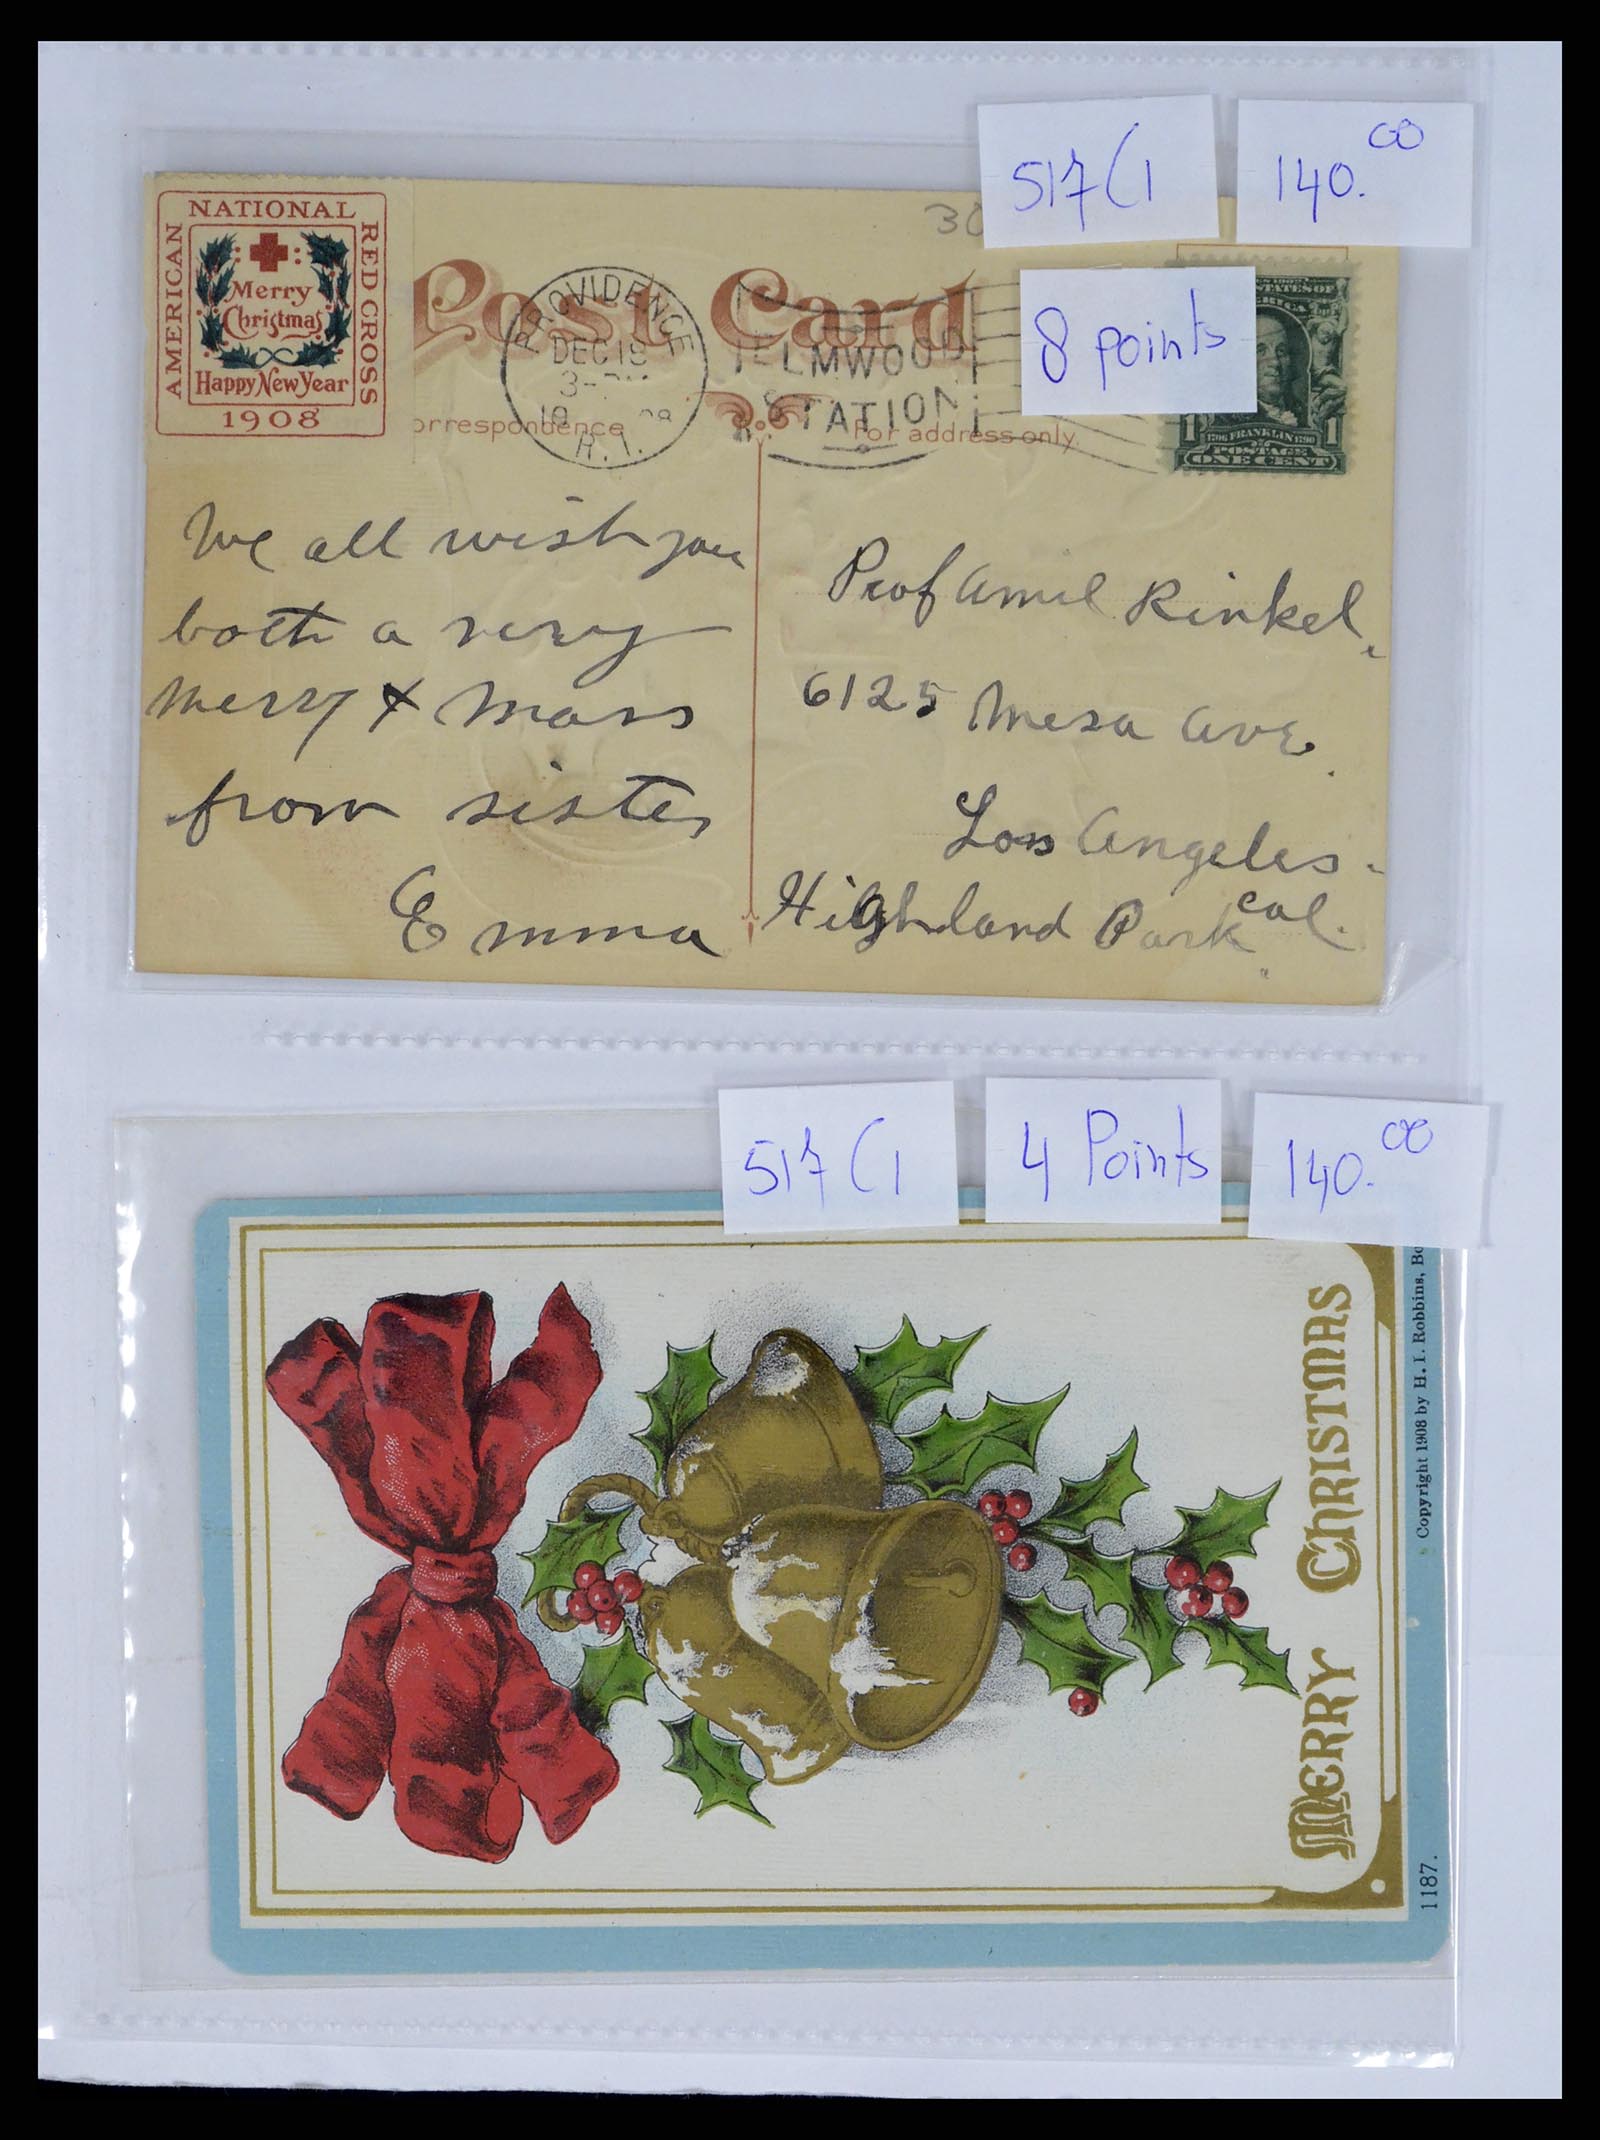 37668 057 - Stamp collection 37668 USA Christmas seals on cover 1908-2009.